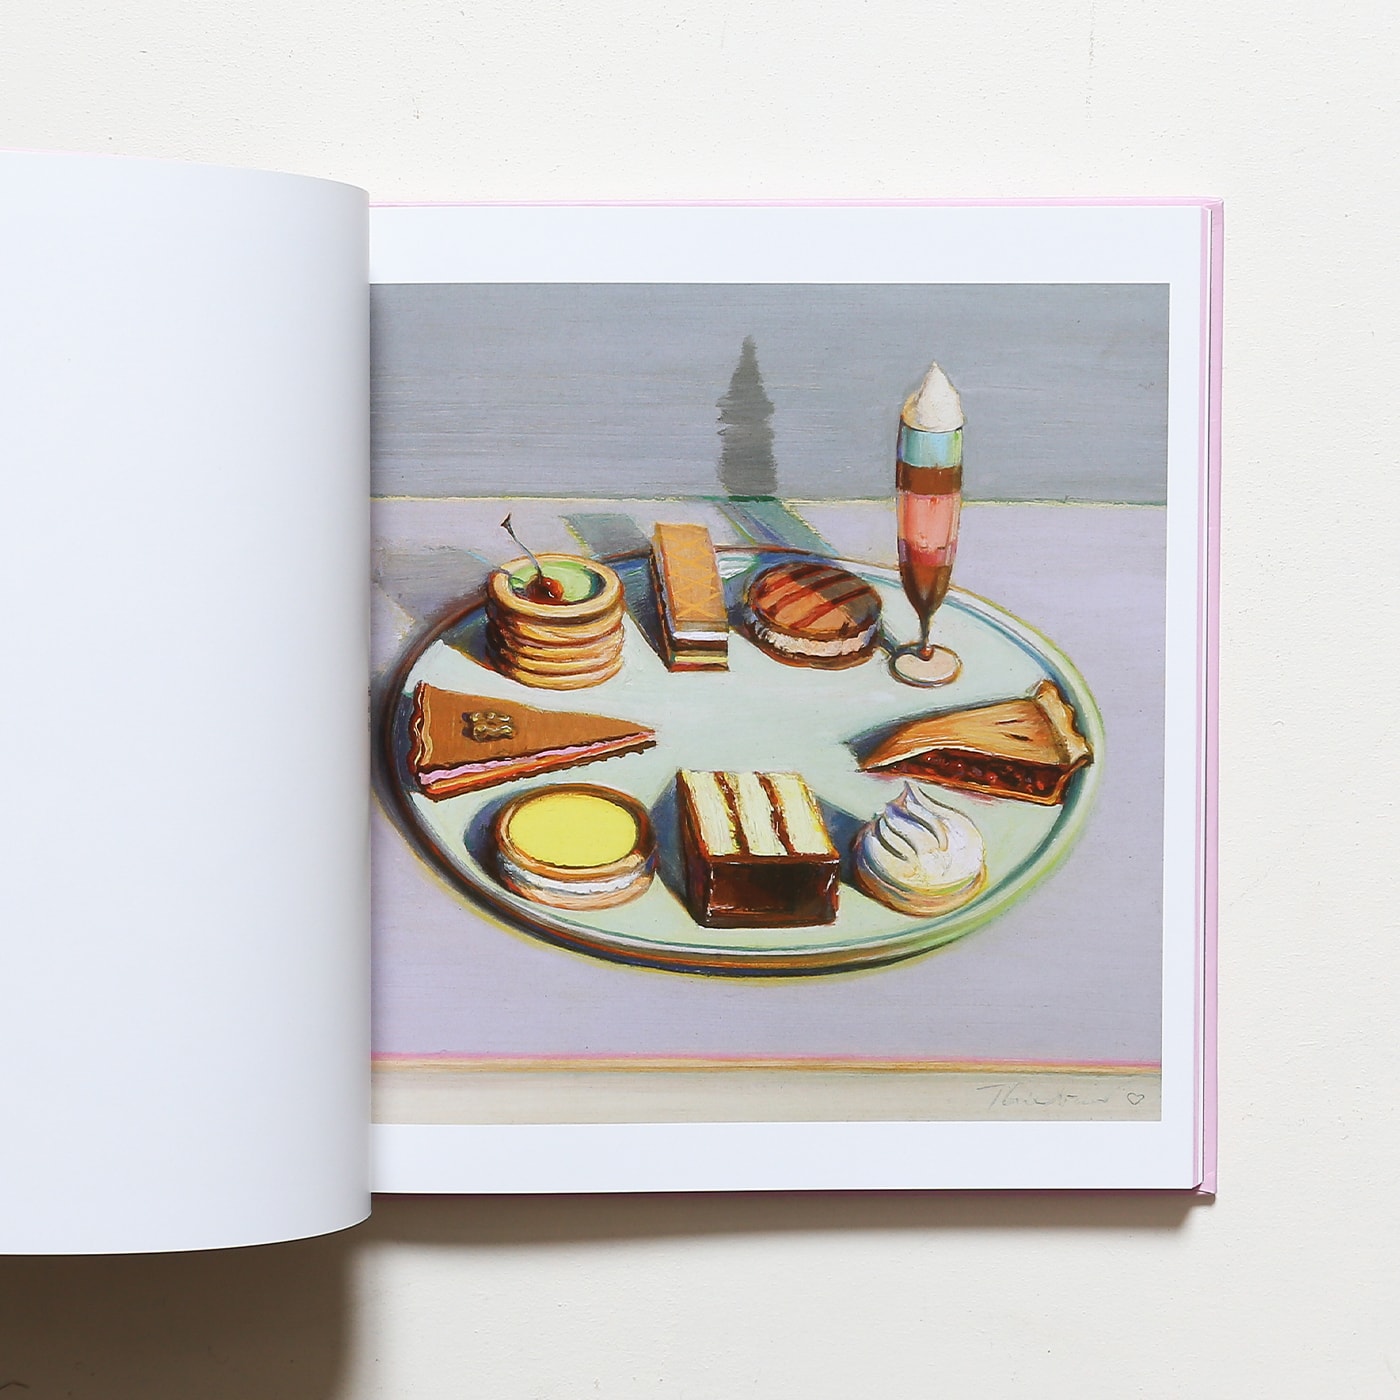 Delicious Metropolis: The Desserts and Urban Scenes of Wayne Thiebaud